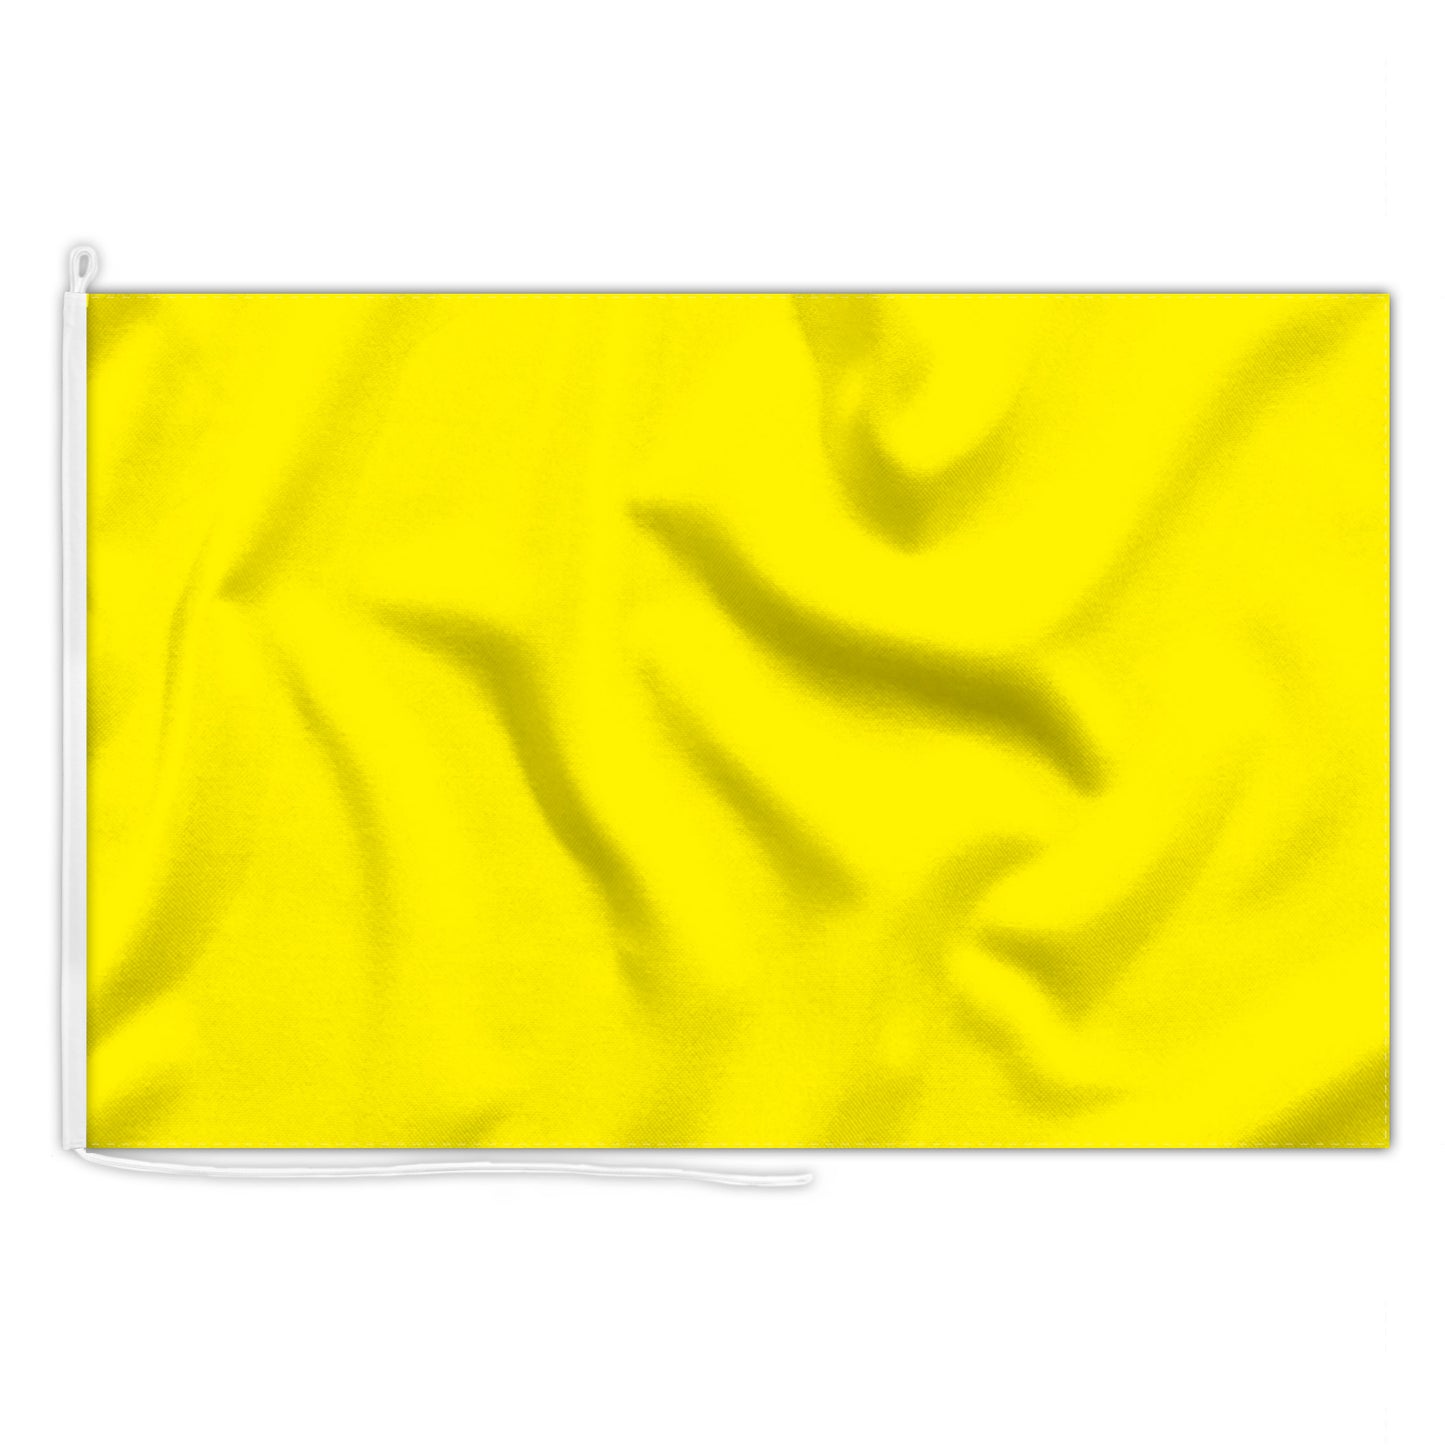 Regatta flag - YELLOW